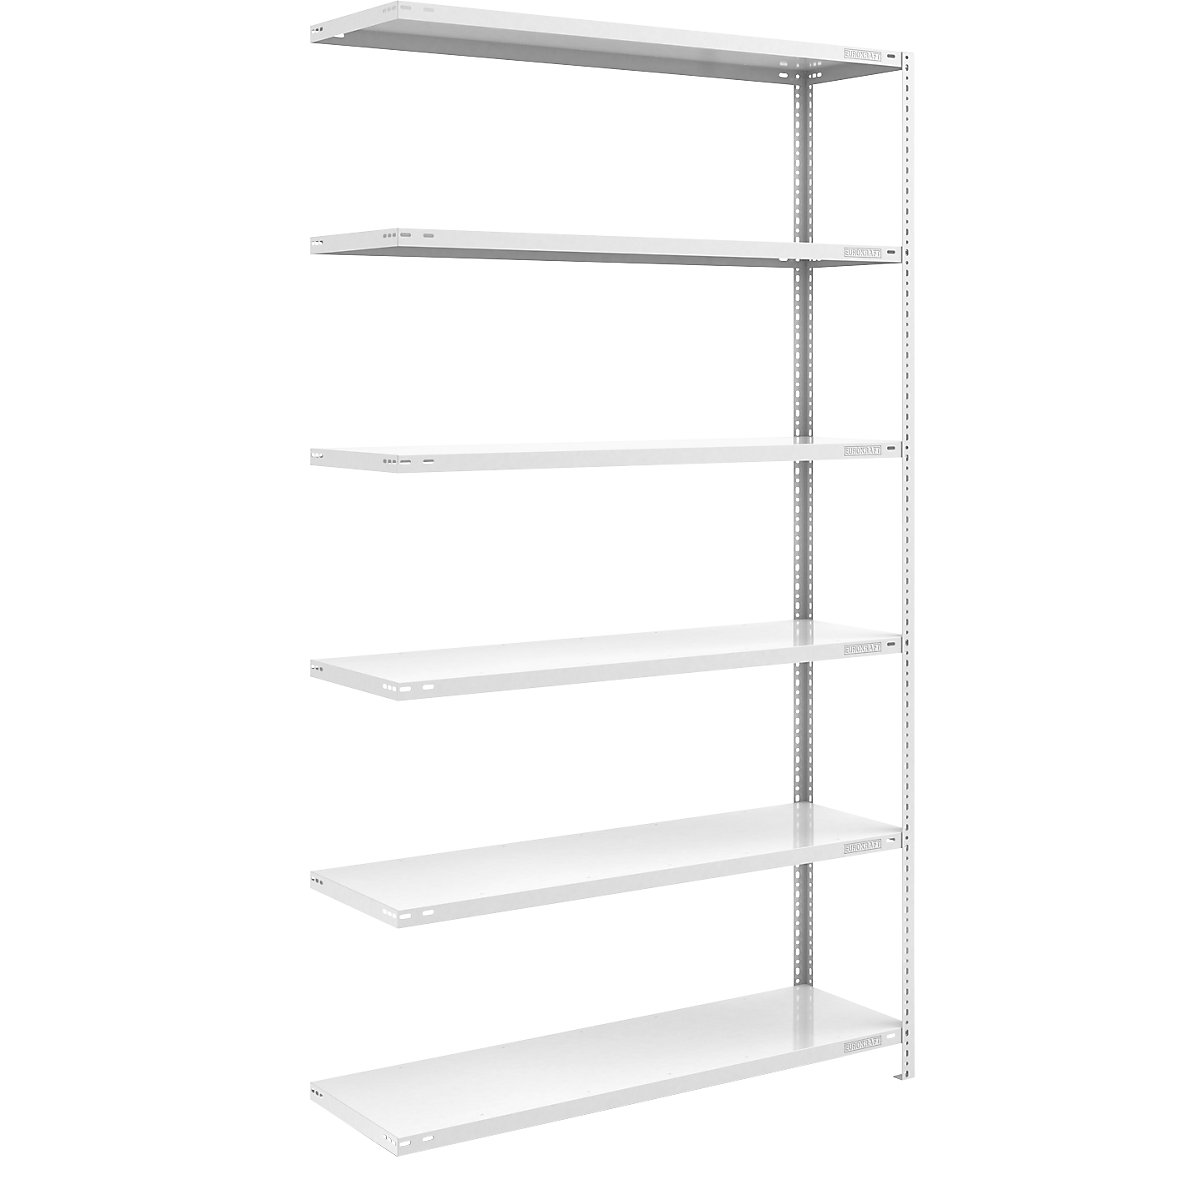 Bolt-together shelf unit, light duty, plastic coated – eurokraft pro, shelf unit height 2500 mm, shelf width 1300 mm, depth 500 mm, extension shelf unit-4